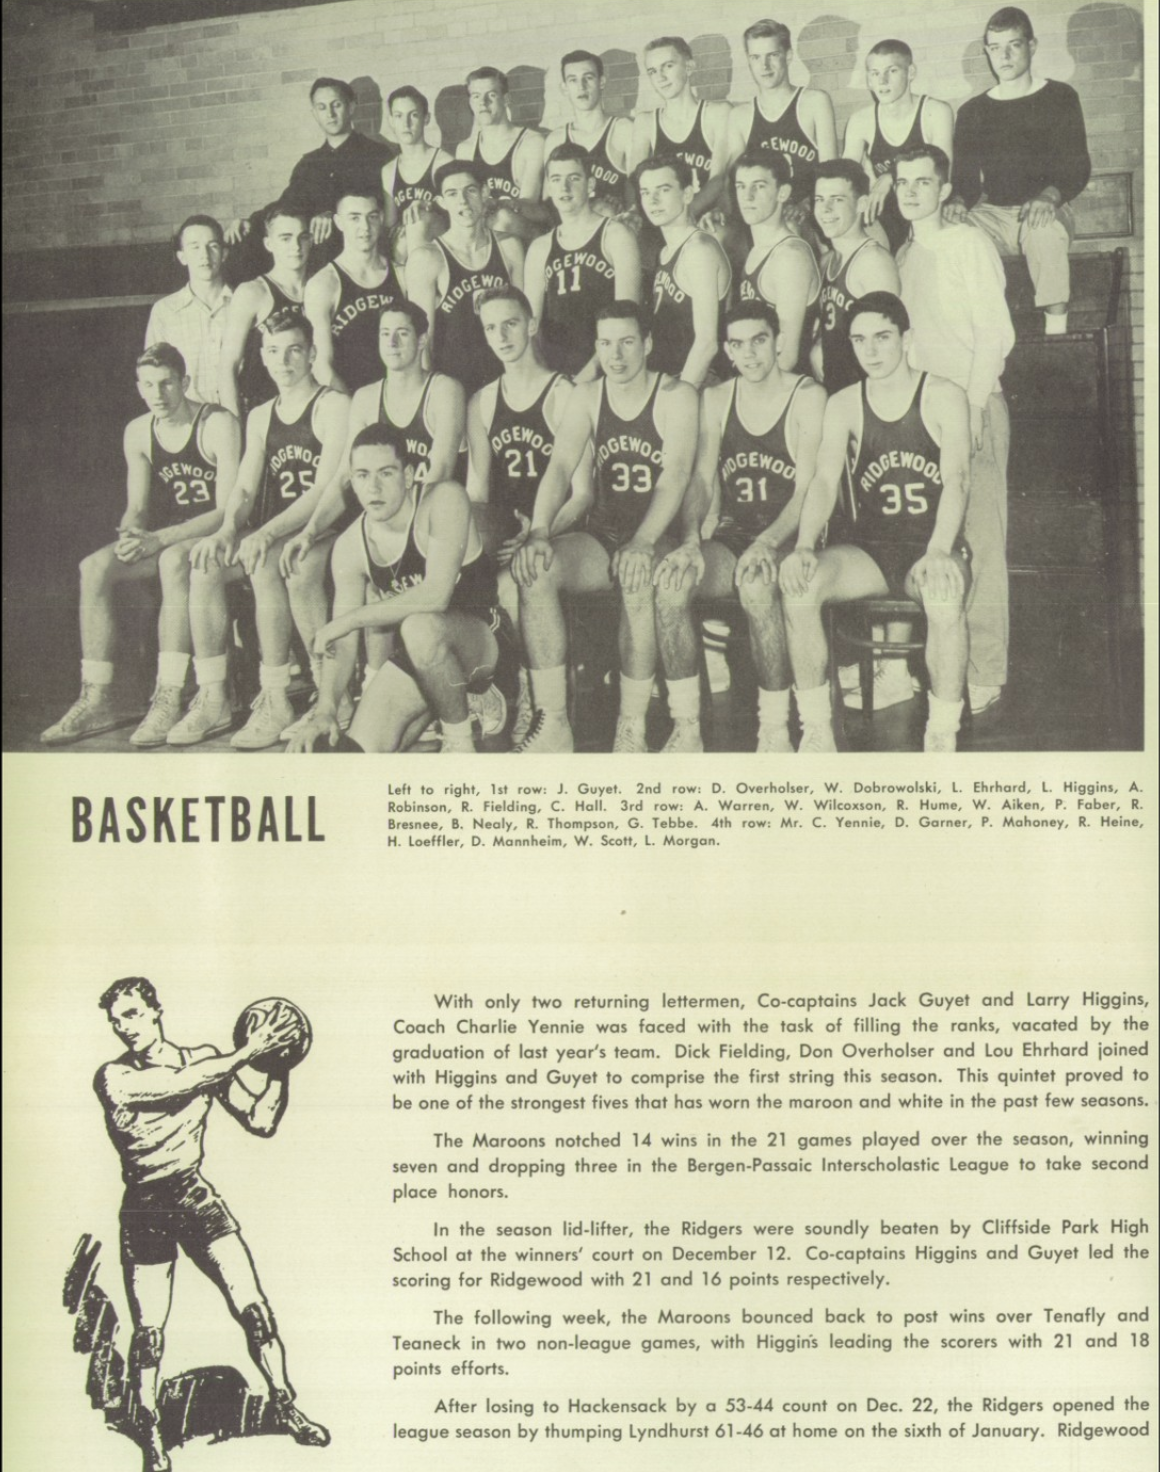 1953 Boys’ Basketball Team